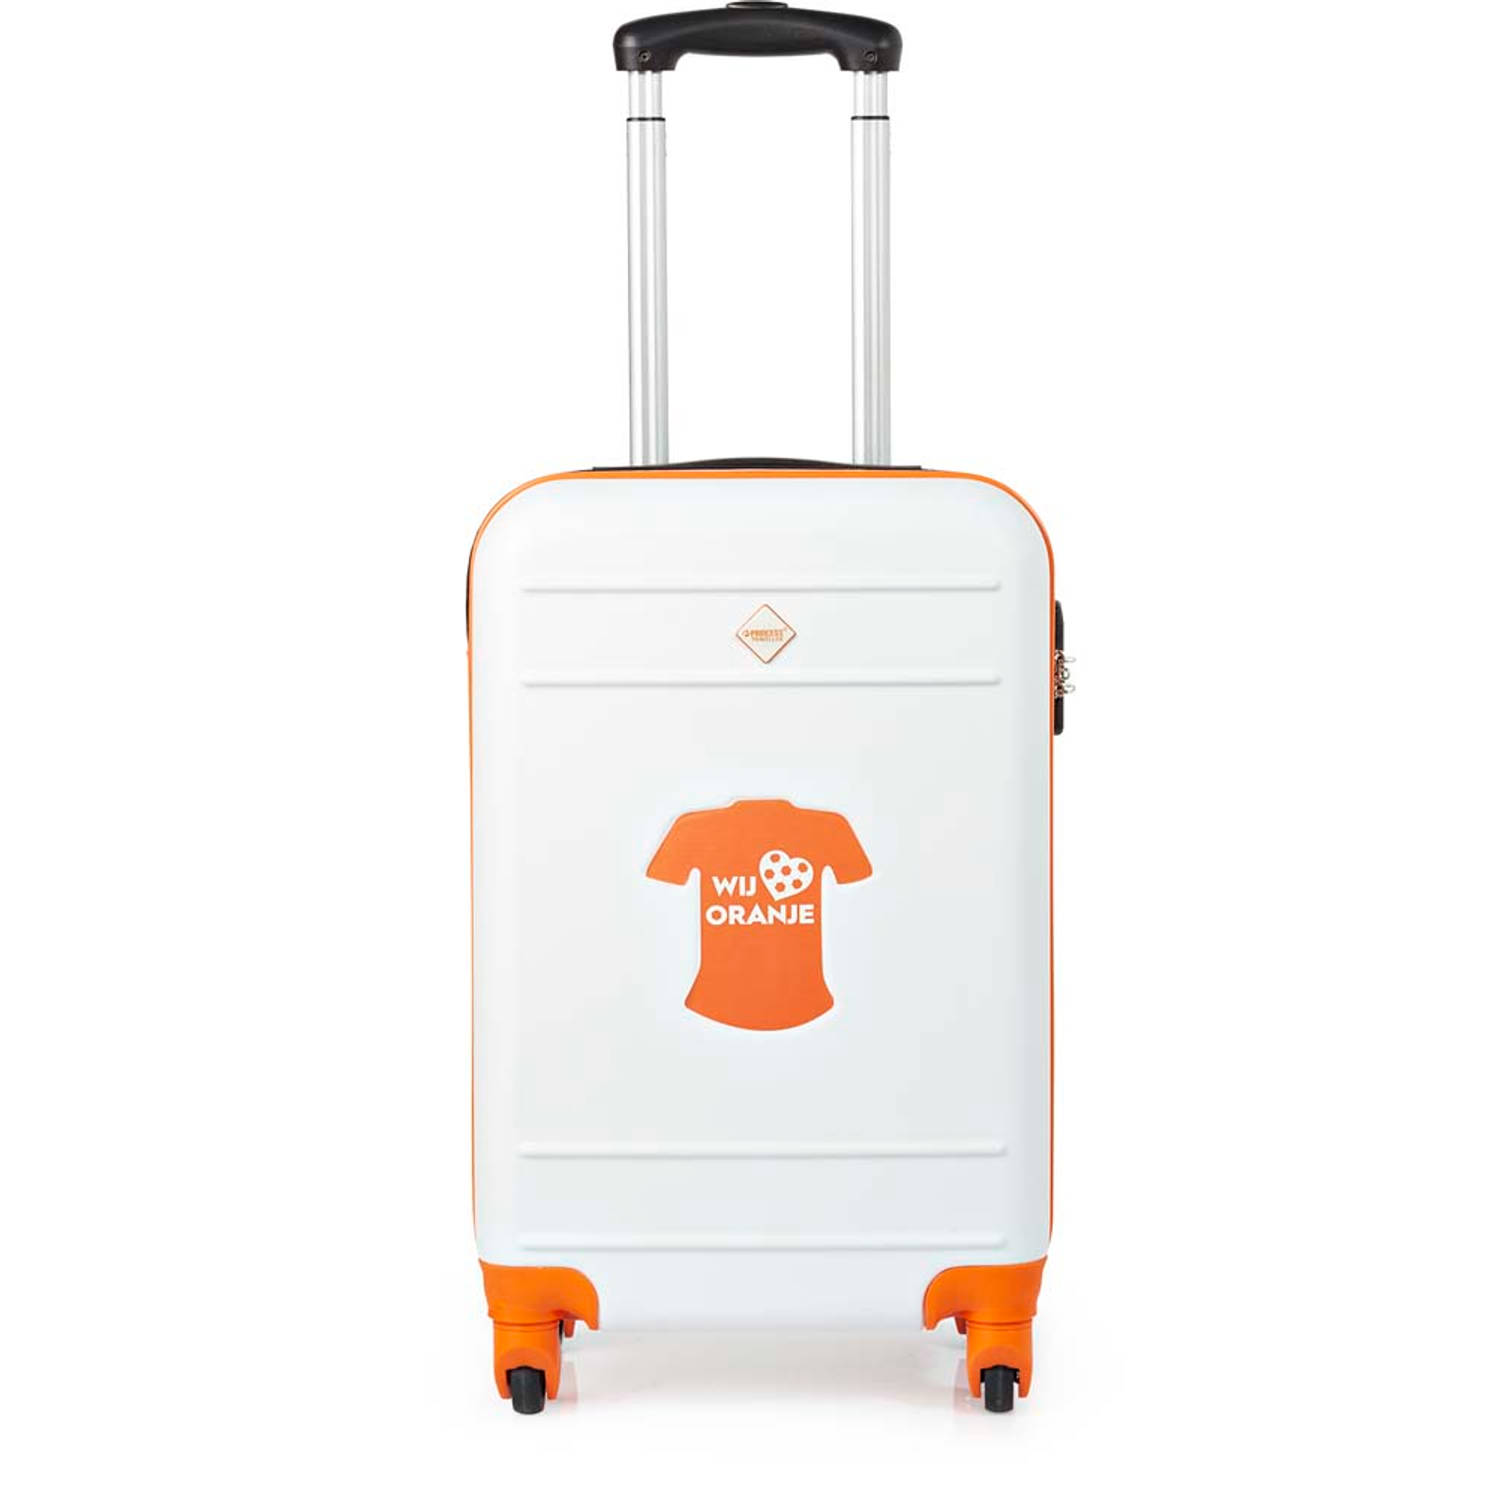 Ga naar beneden Snazzy Agnes Gray Princess Traveller Oranje koffer - ABS - S | Blokker